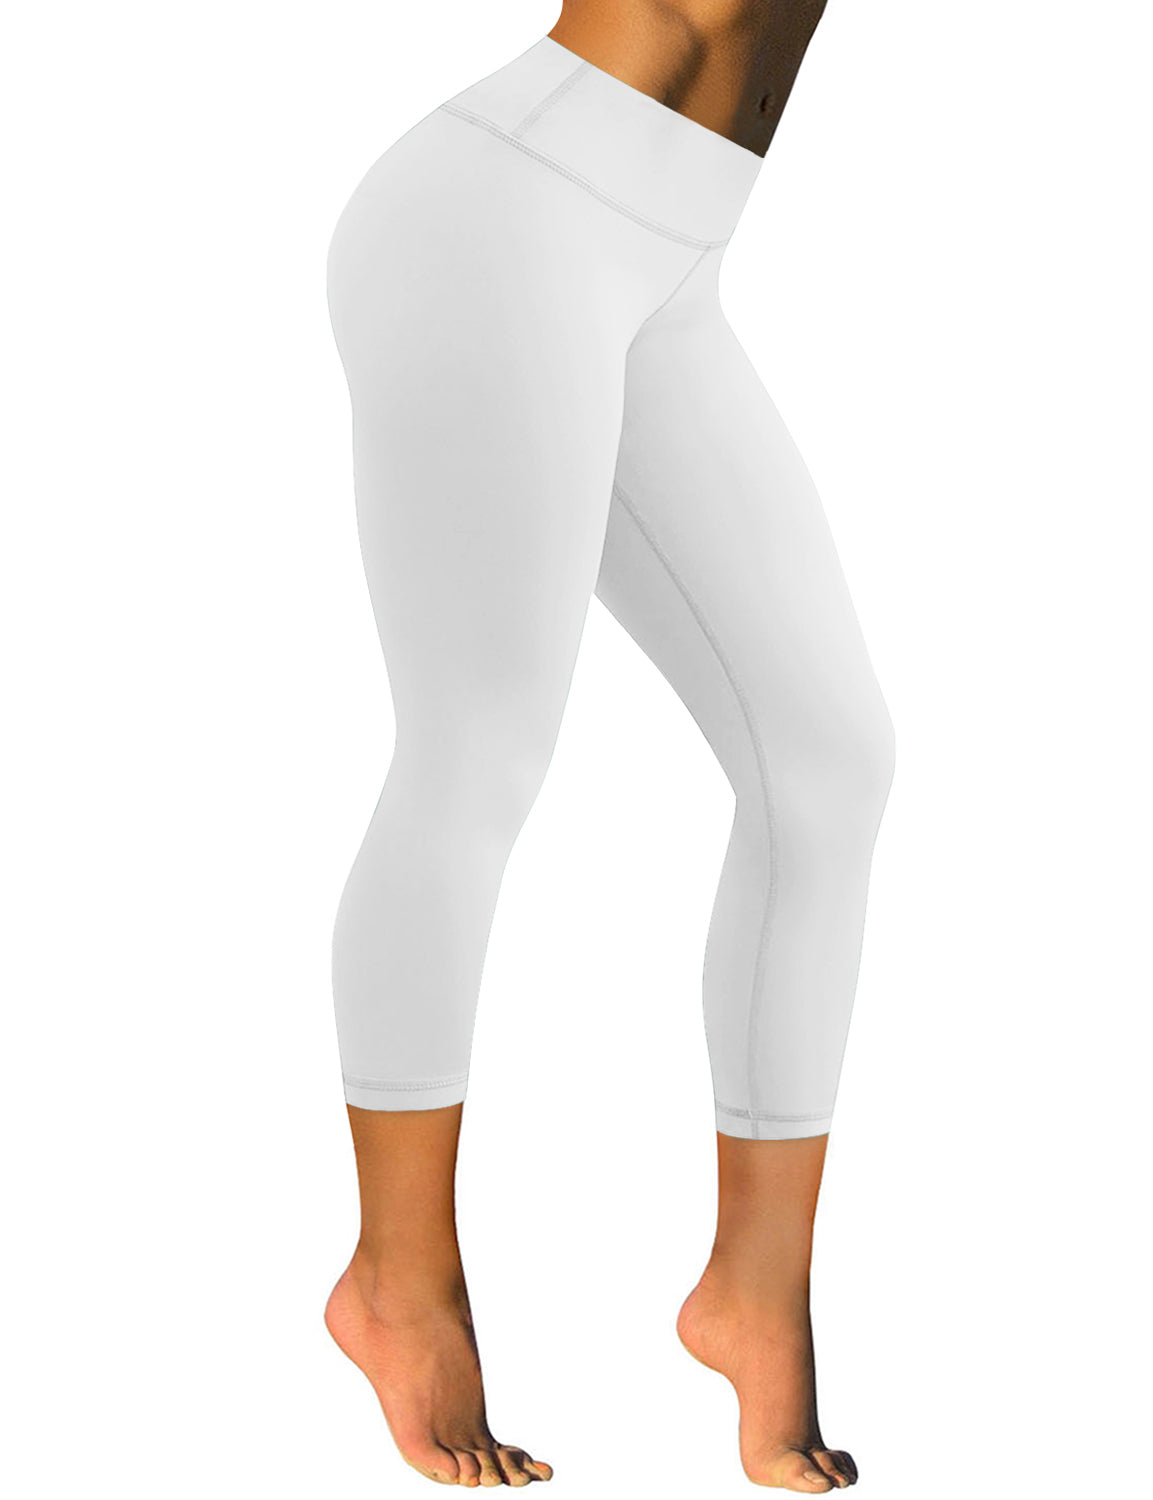  BUBBLELIME 22 Women High Waist Yoga Pants Basic Workout  Running - Basic CaprisScarlet Large-22 Inseam